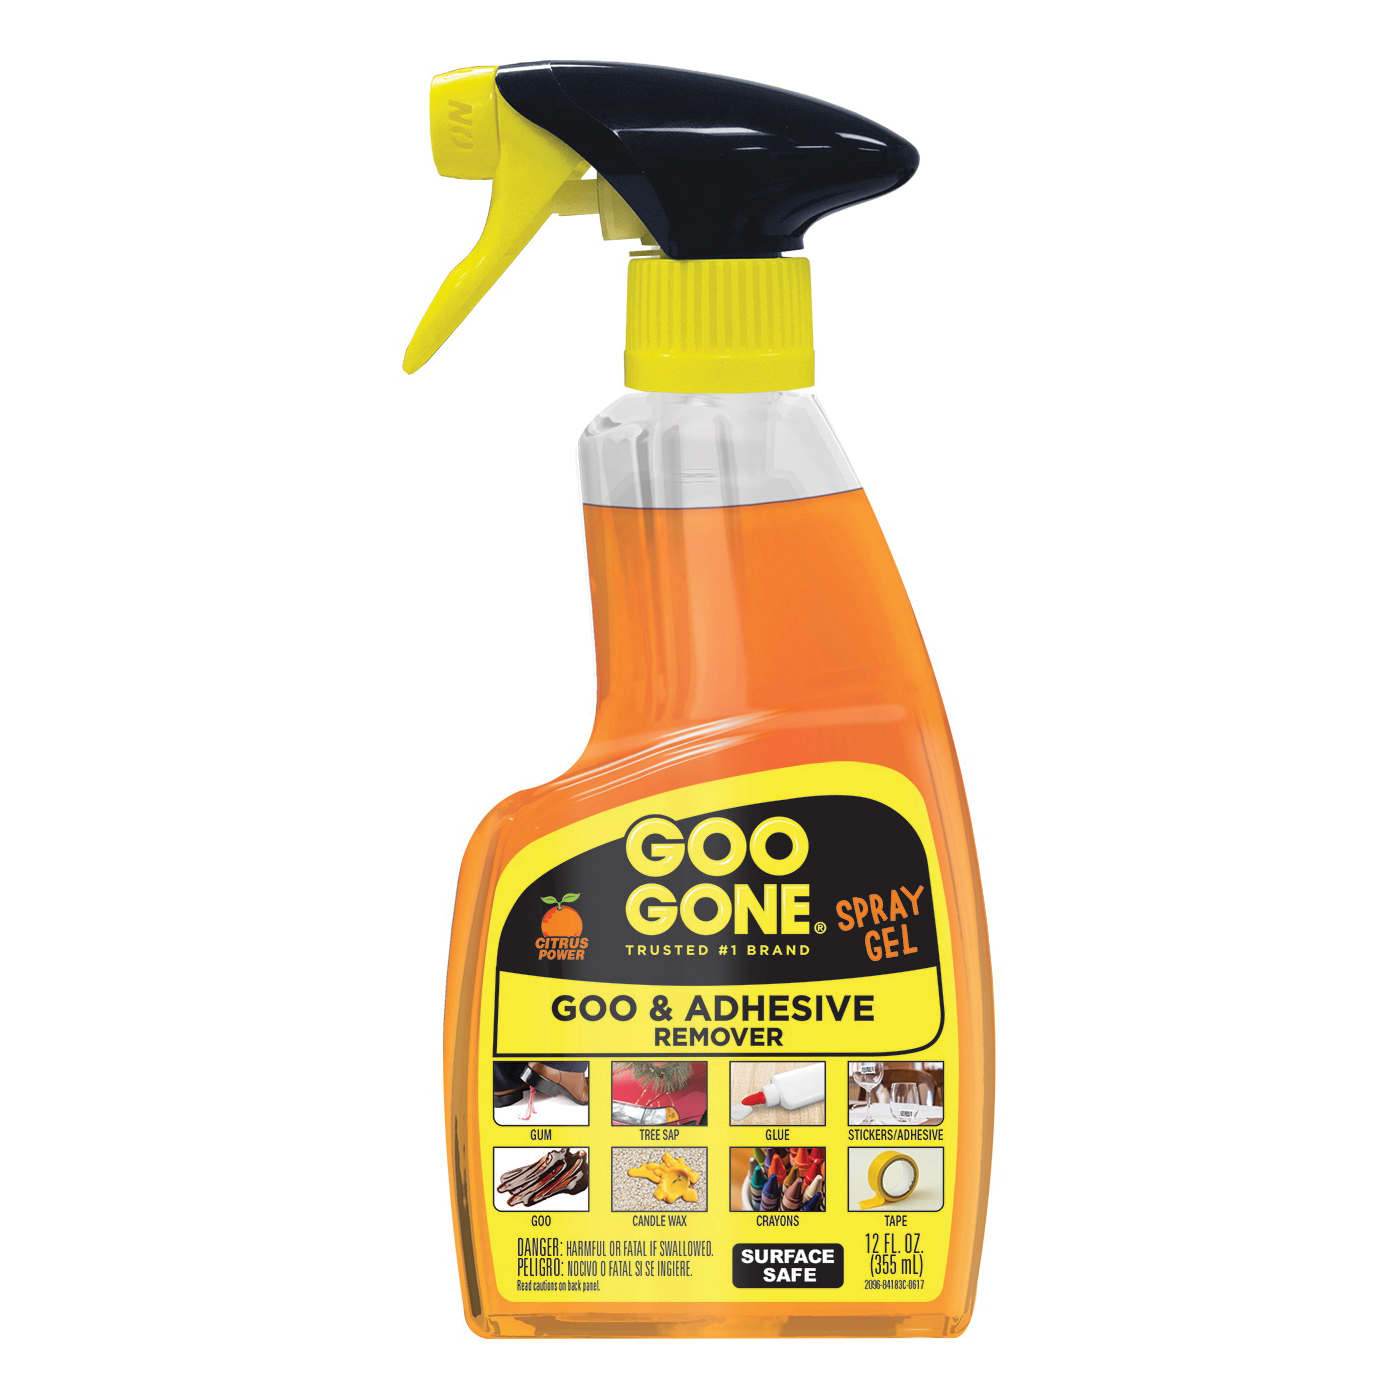 2096 Goo and Adhesive Remover, 12 oz Spray Bottle, Gel, Citrus, Orange